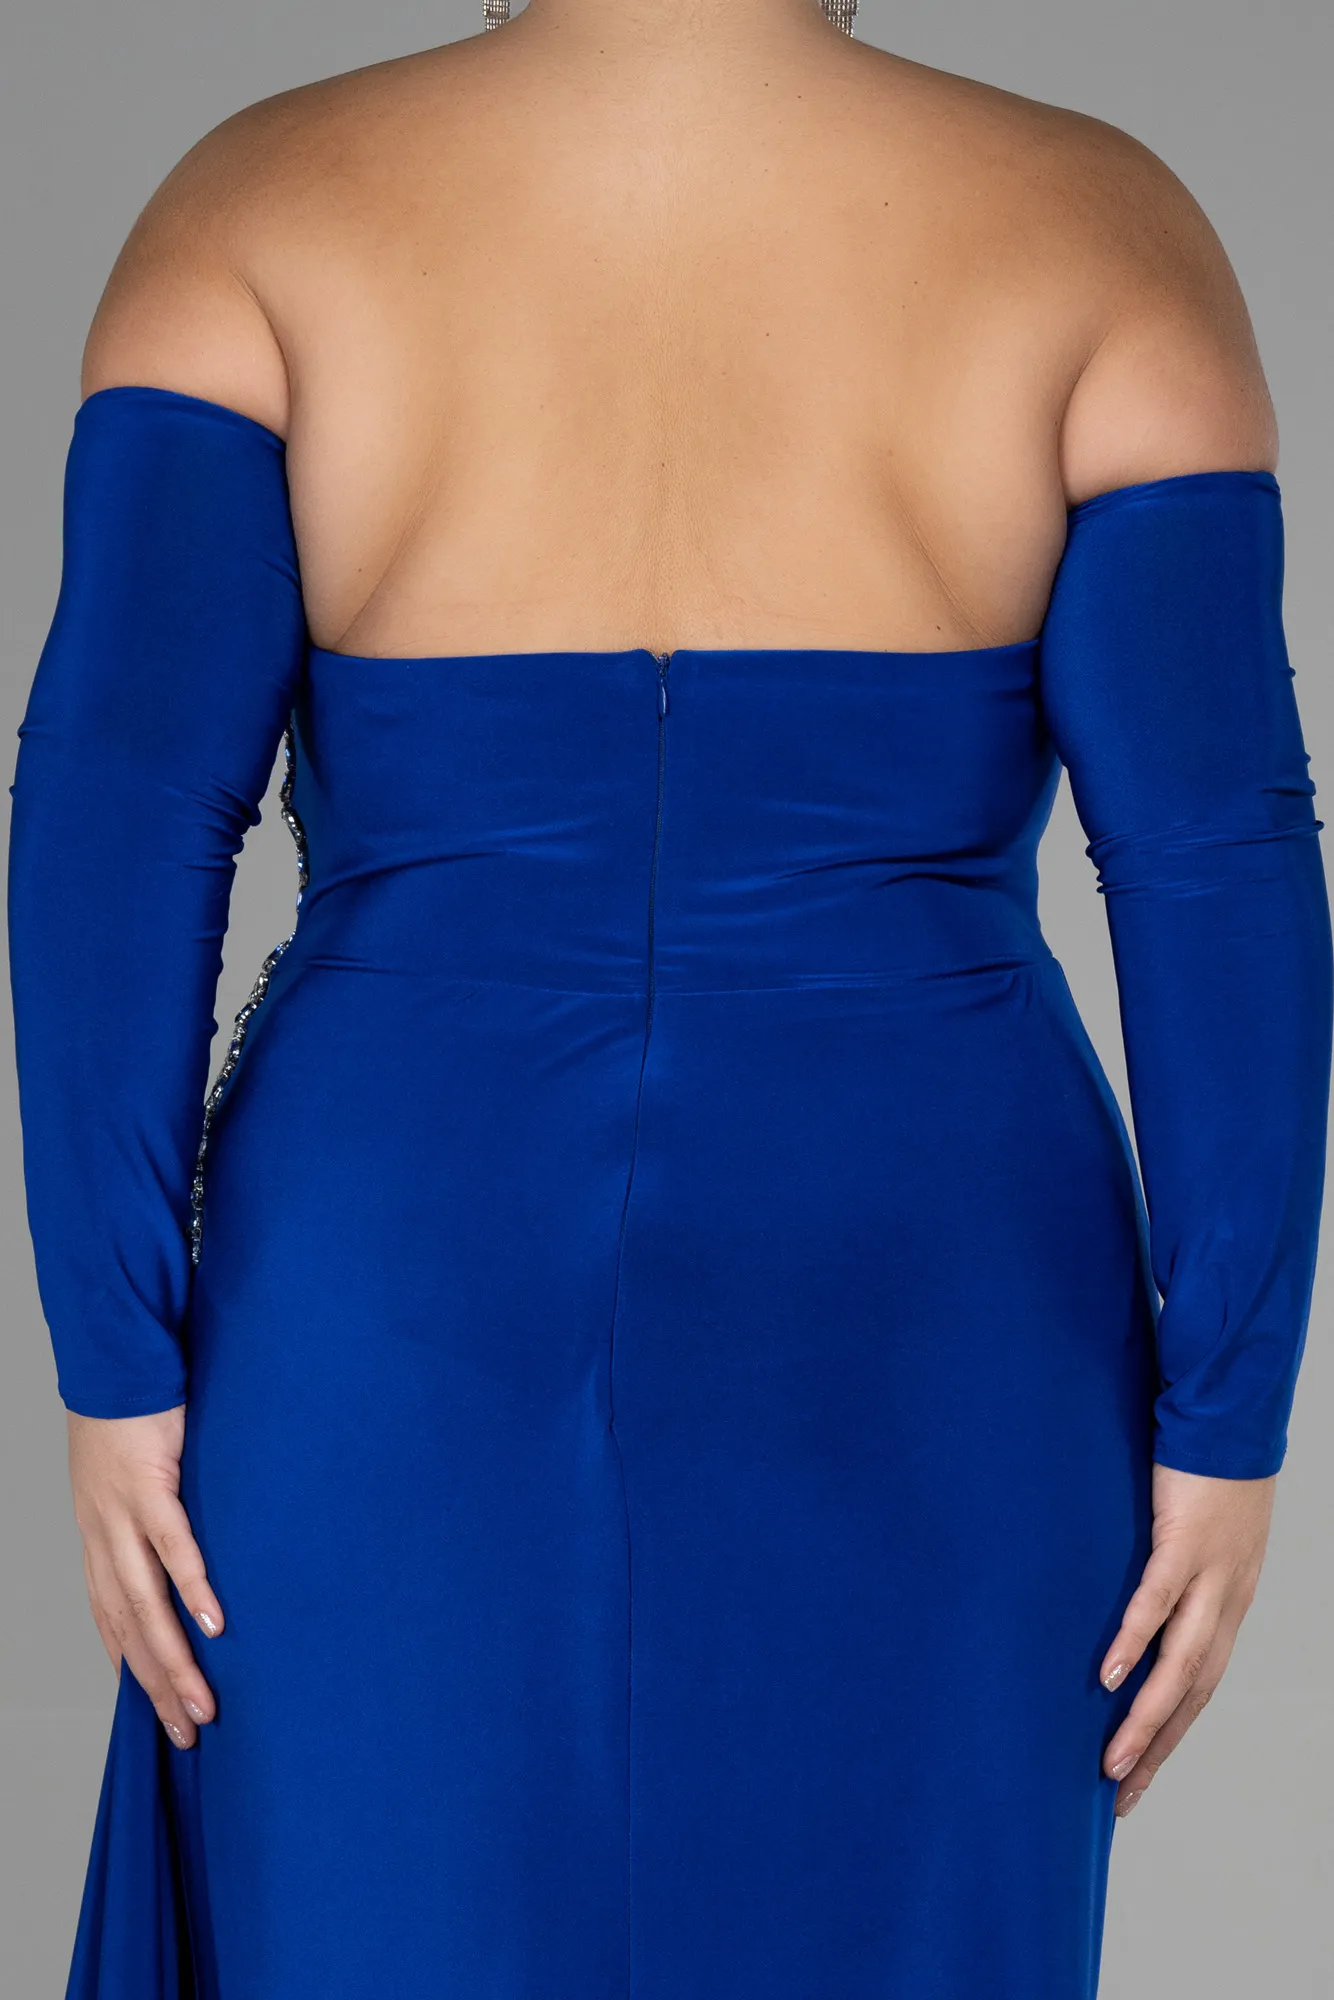 Sax Blue-Long Plus Size Evening Dress ABU3352